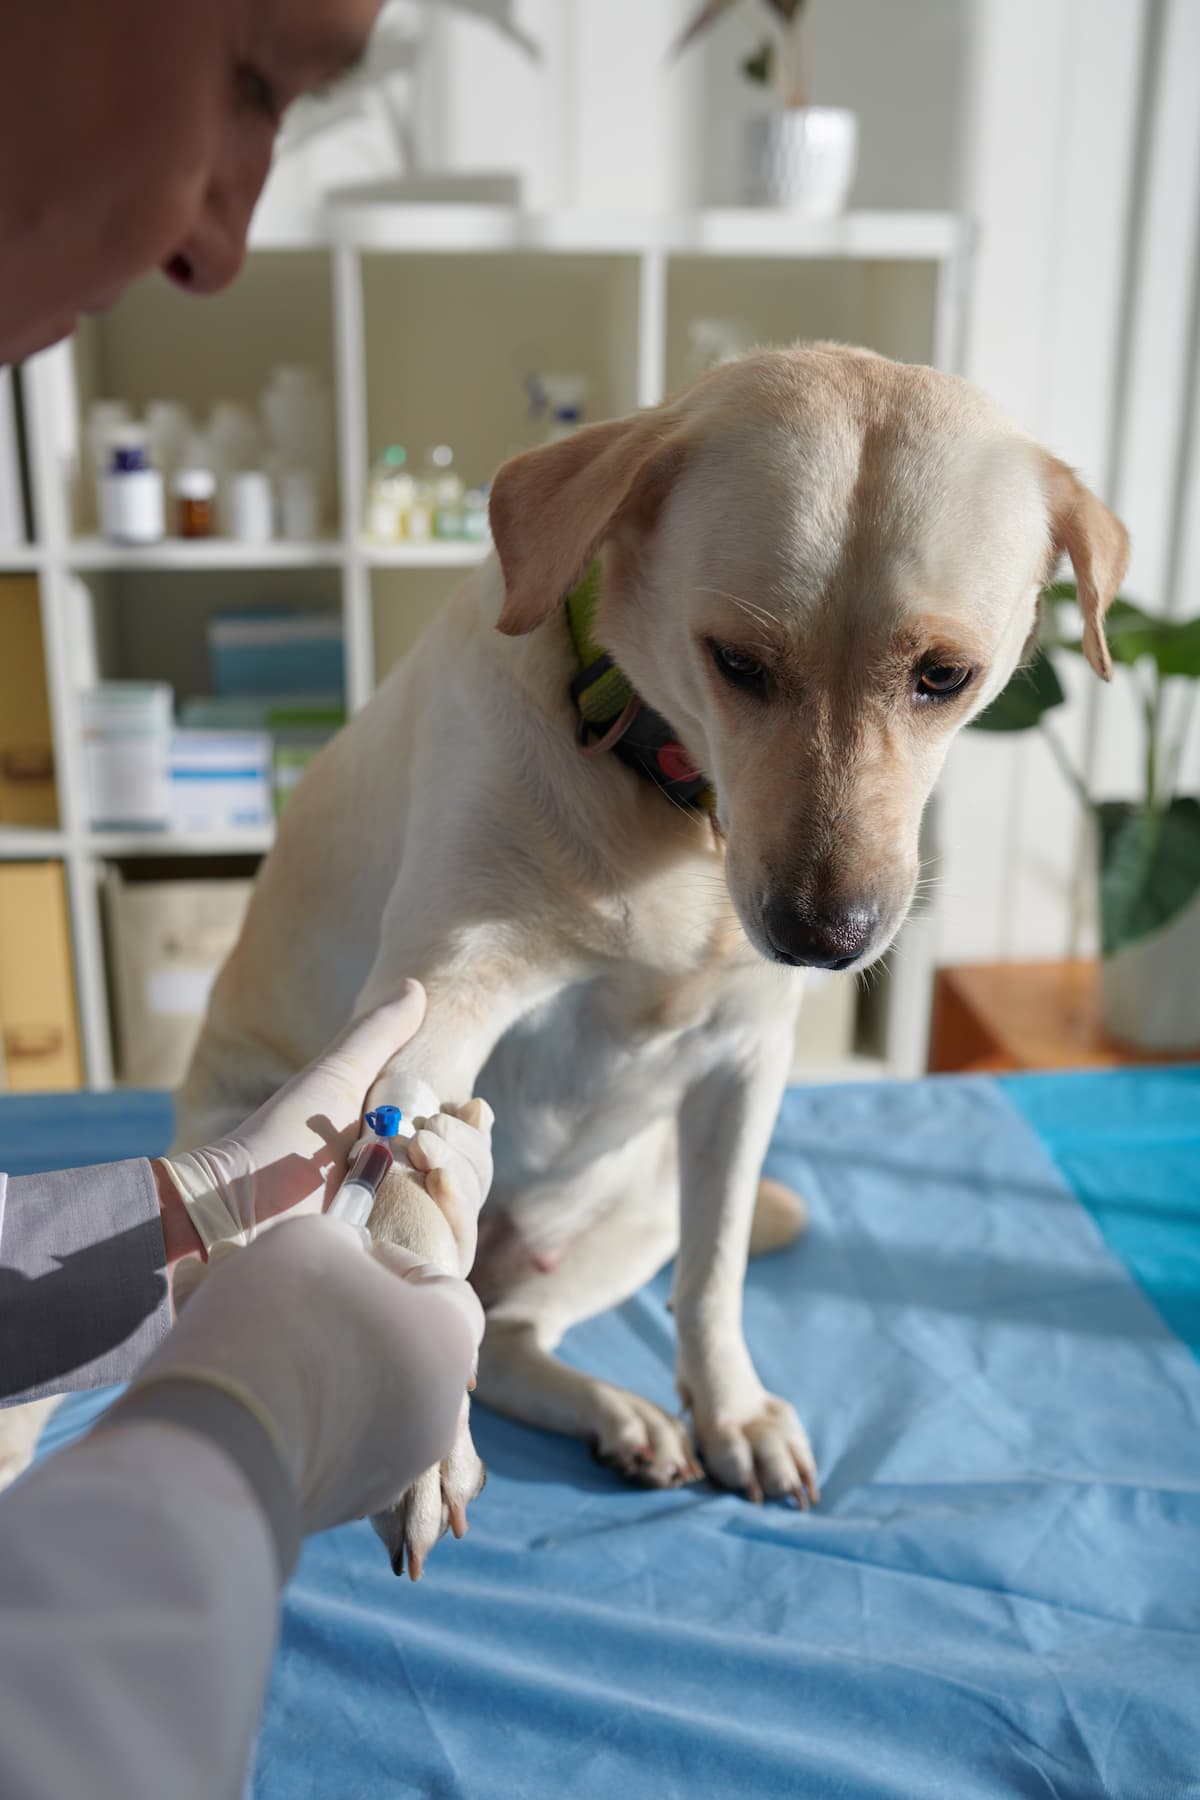 Diabetes in pets – Monitoring their health, by Dr Ingrid Goodman